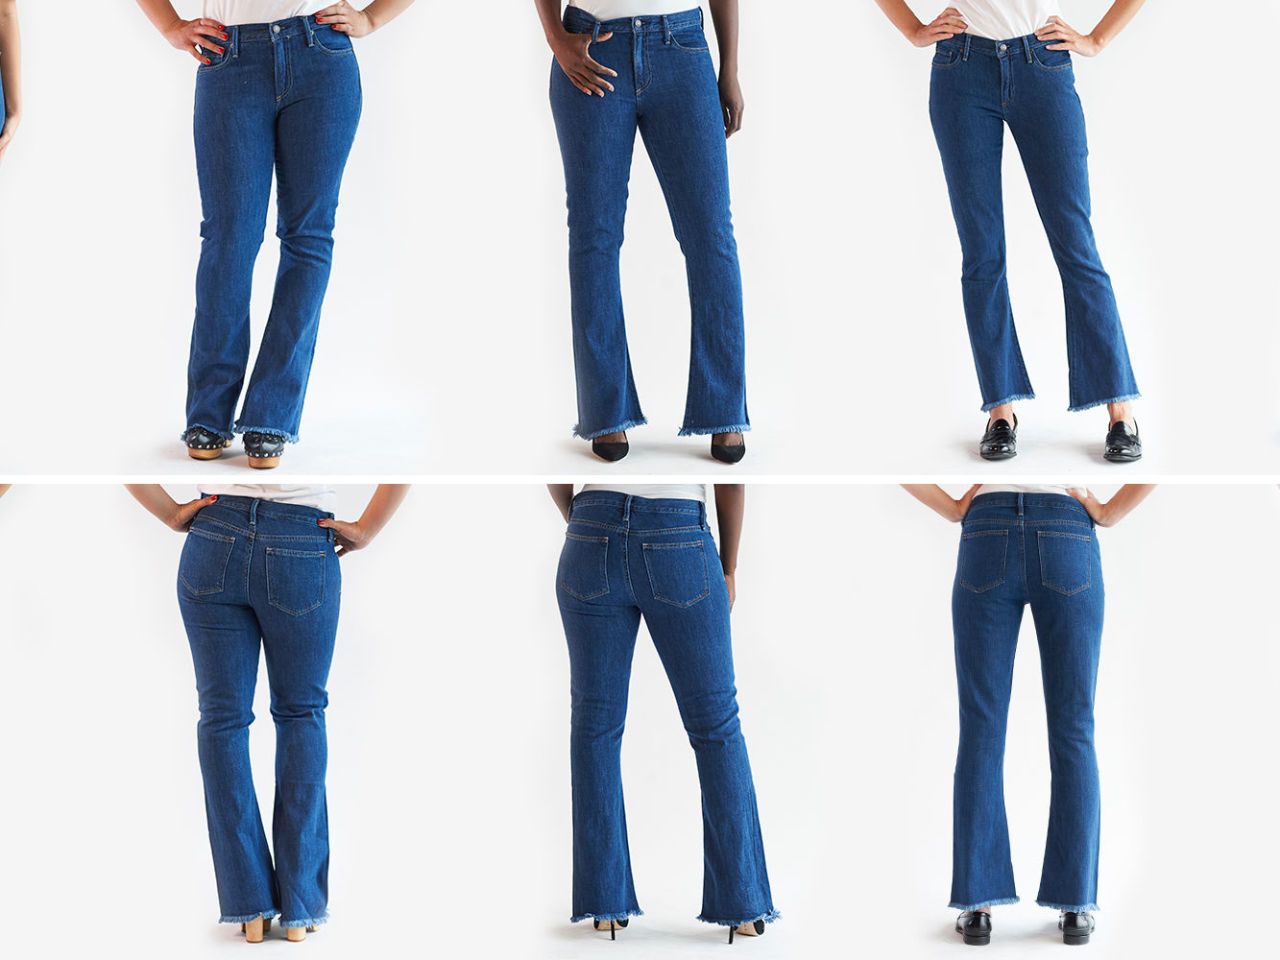 10 Best Types of Jeans for Women – Flattering Denim Styles ...